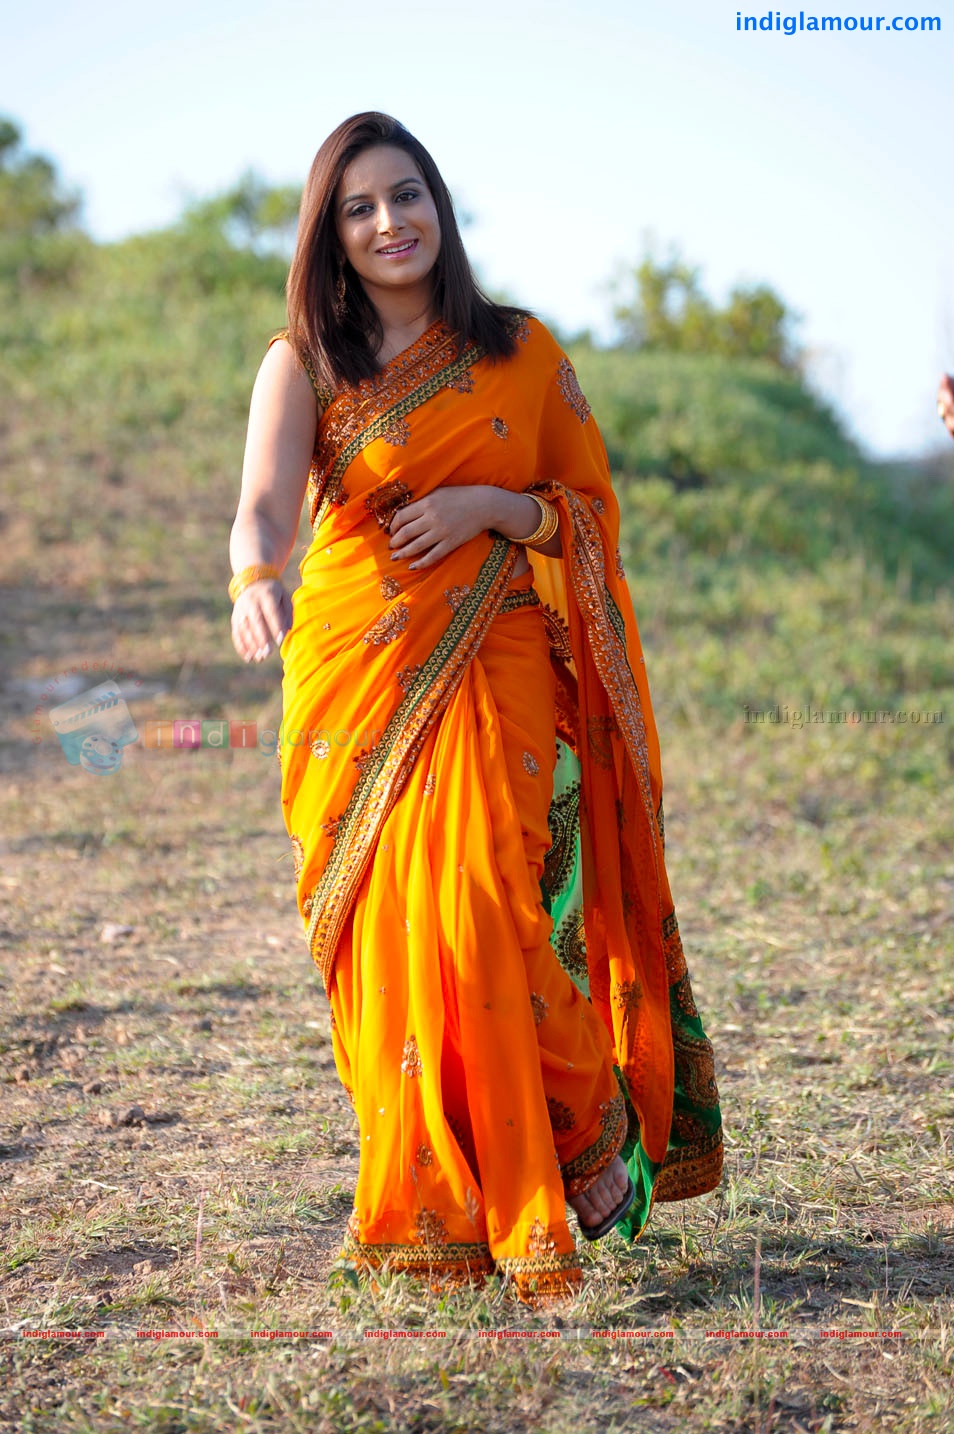 Pooja Gandhi Actress Photo Image Pics And Stills